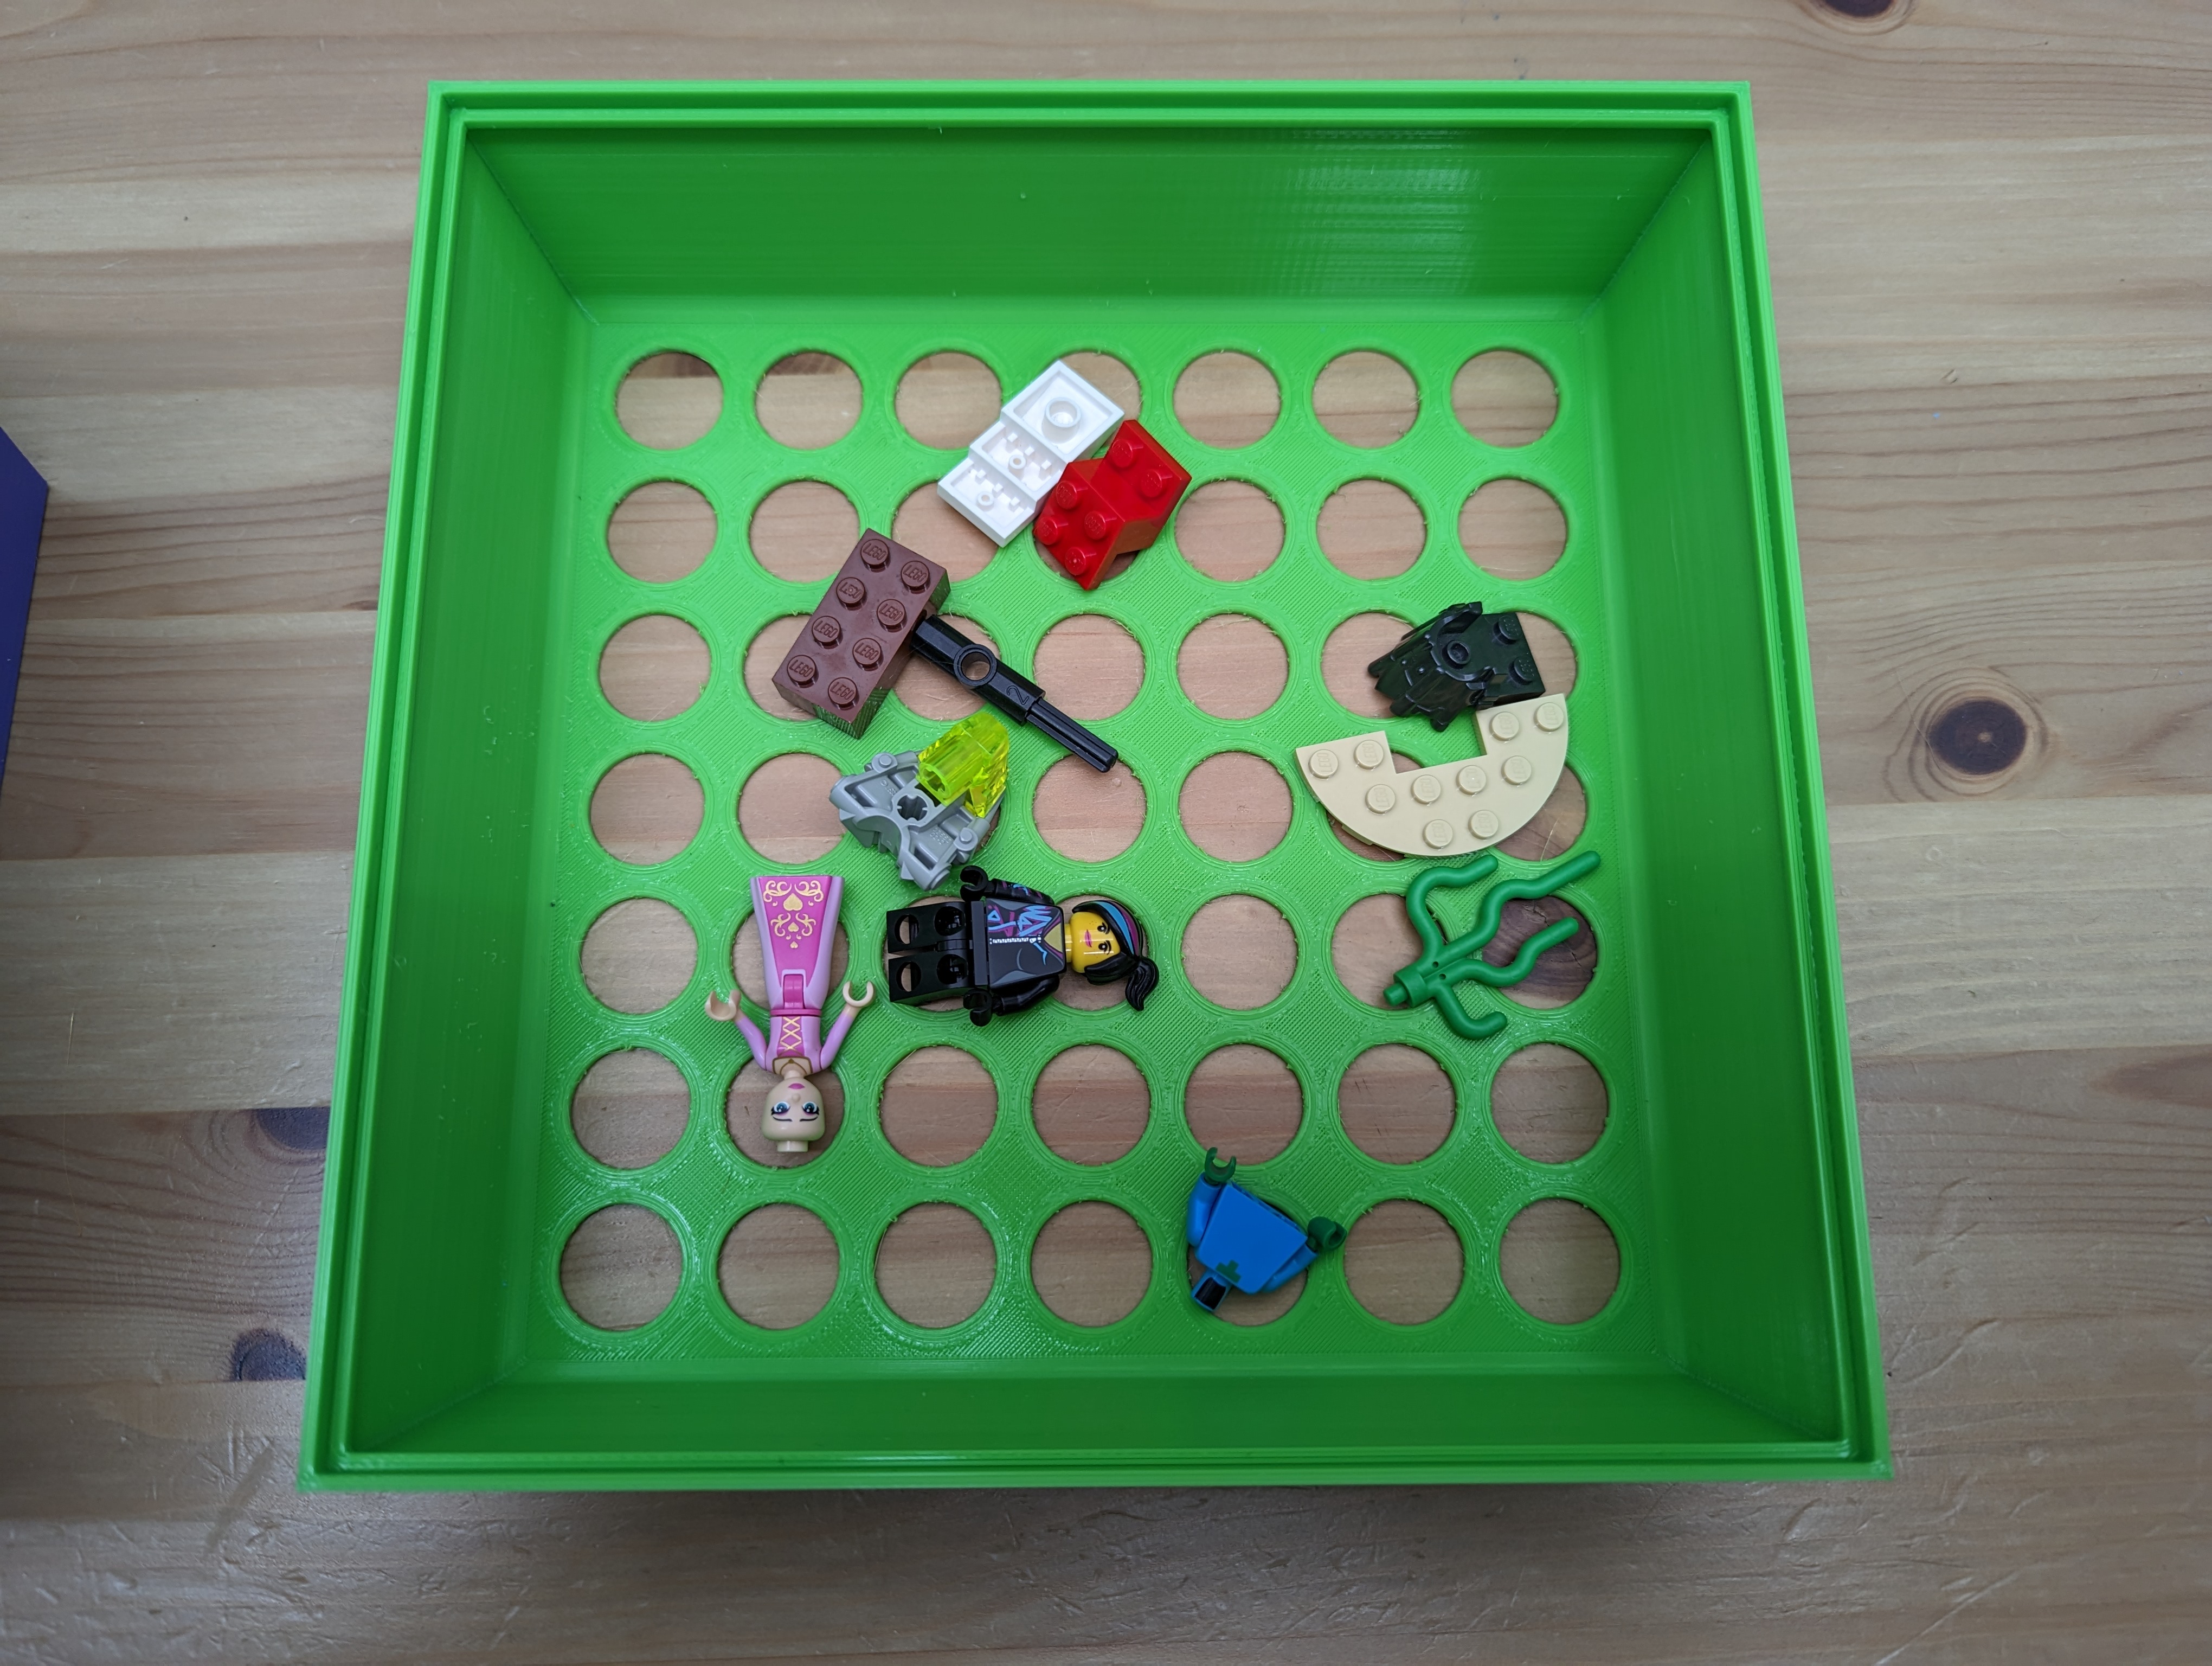 Lego Sorting Trays by art_fpv